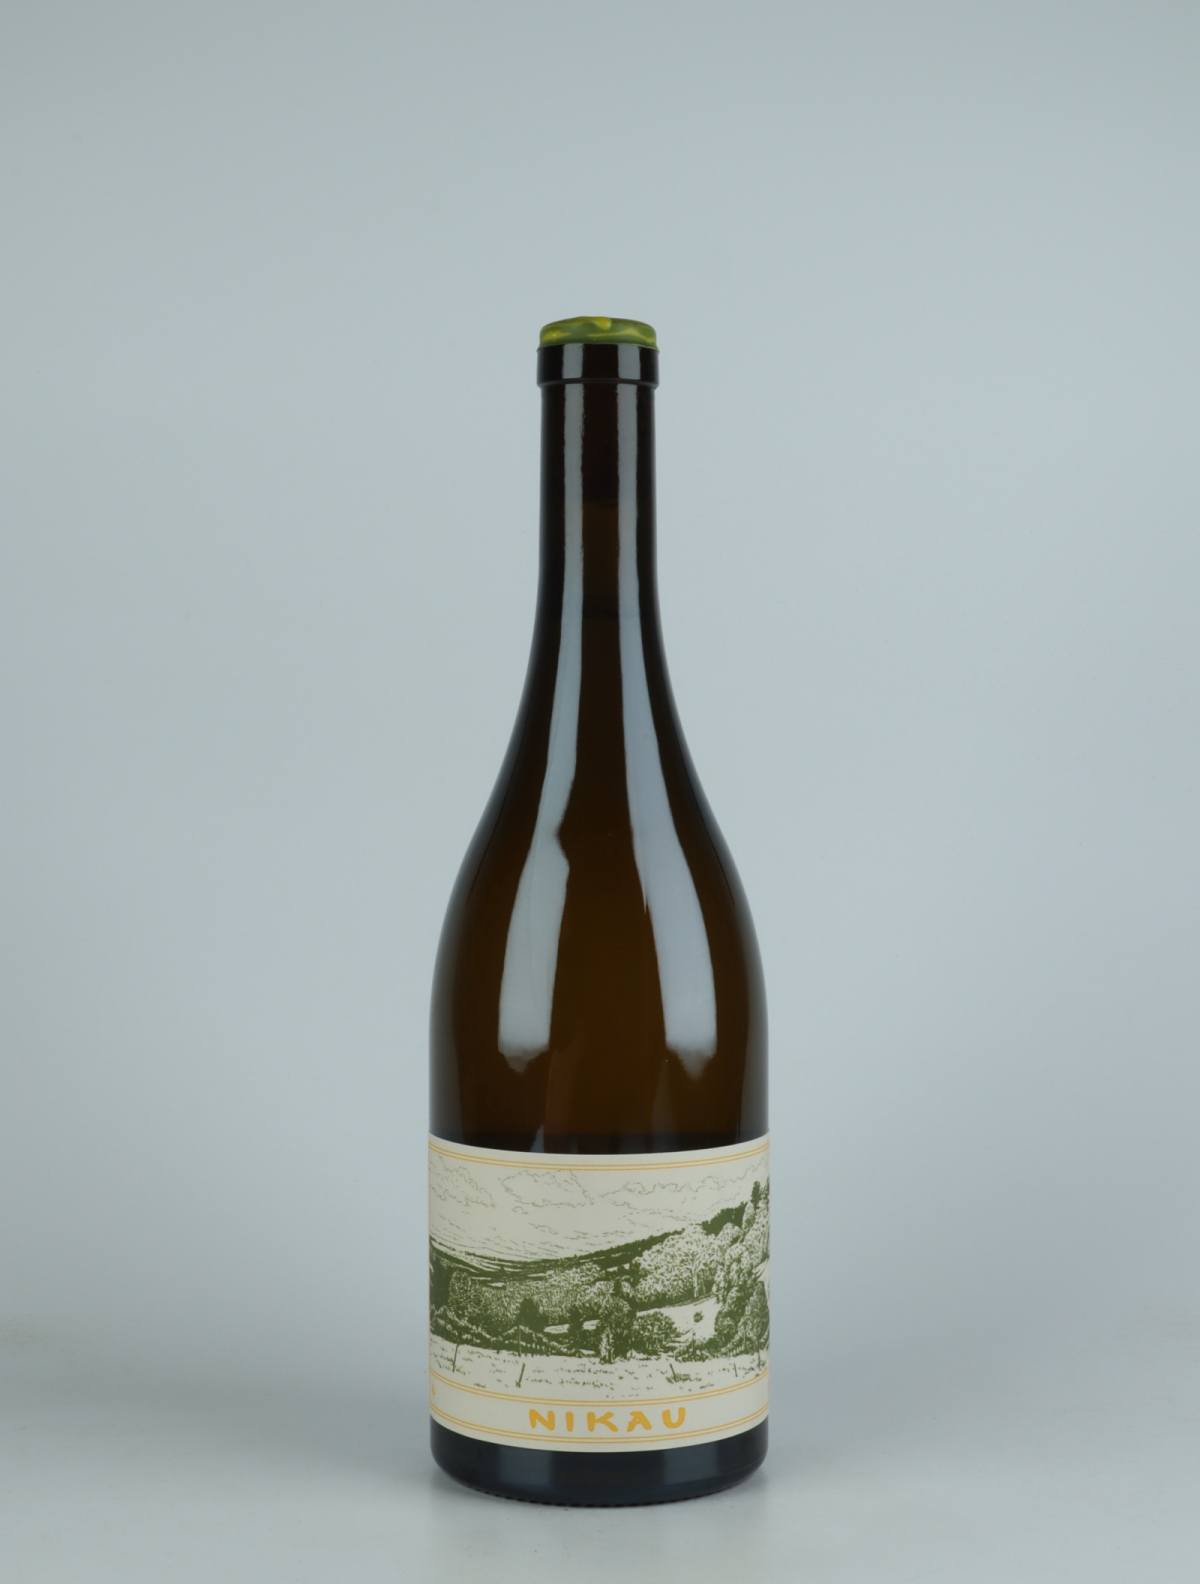 A bottle 2019 Tolone White White wine from Nikau Farm, Victoria in 